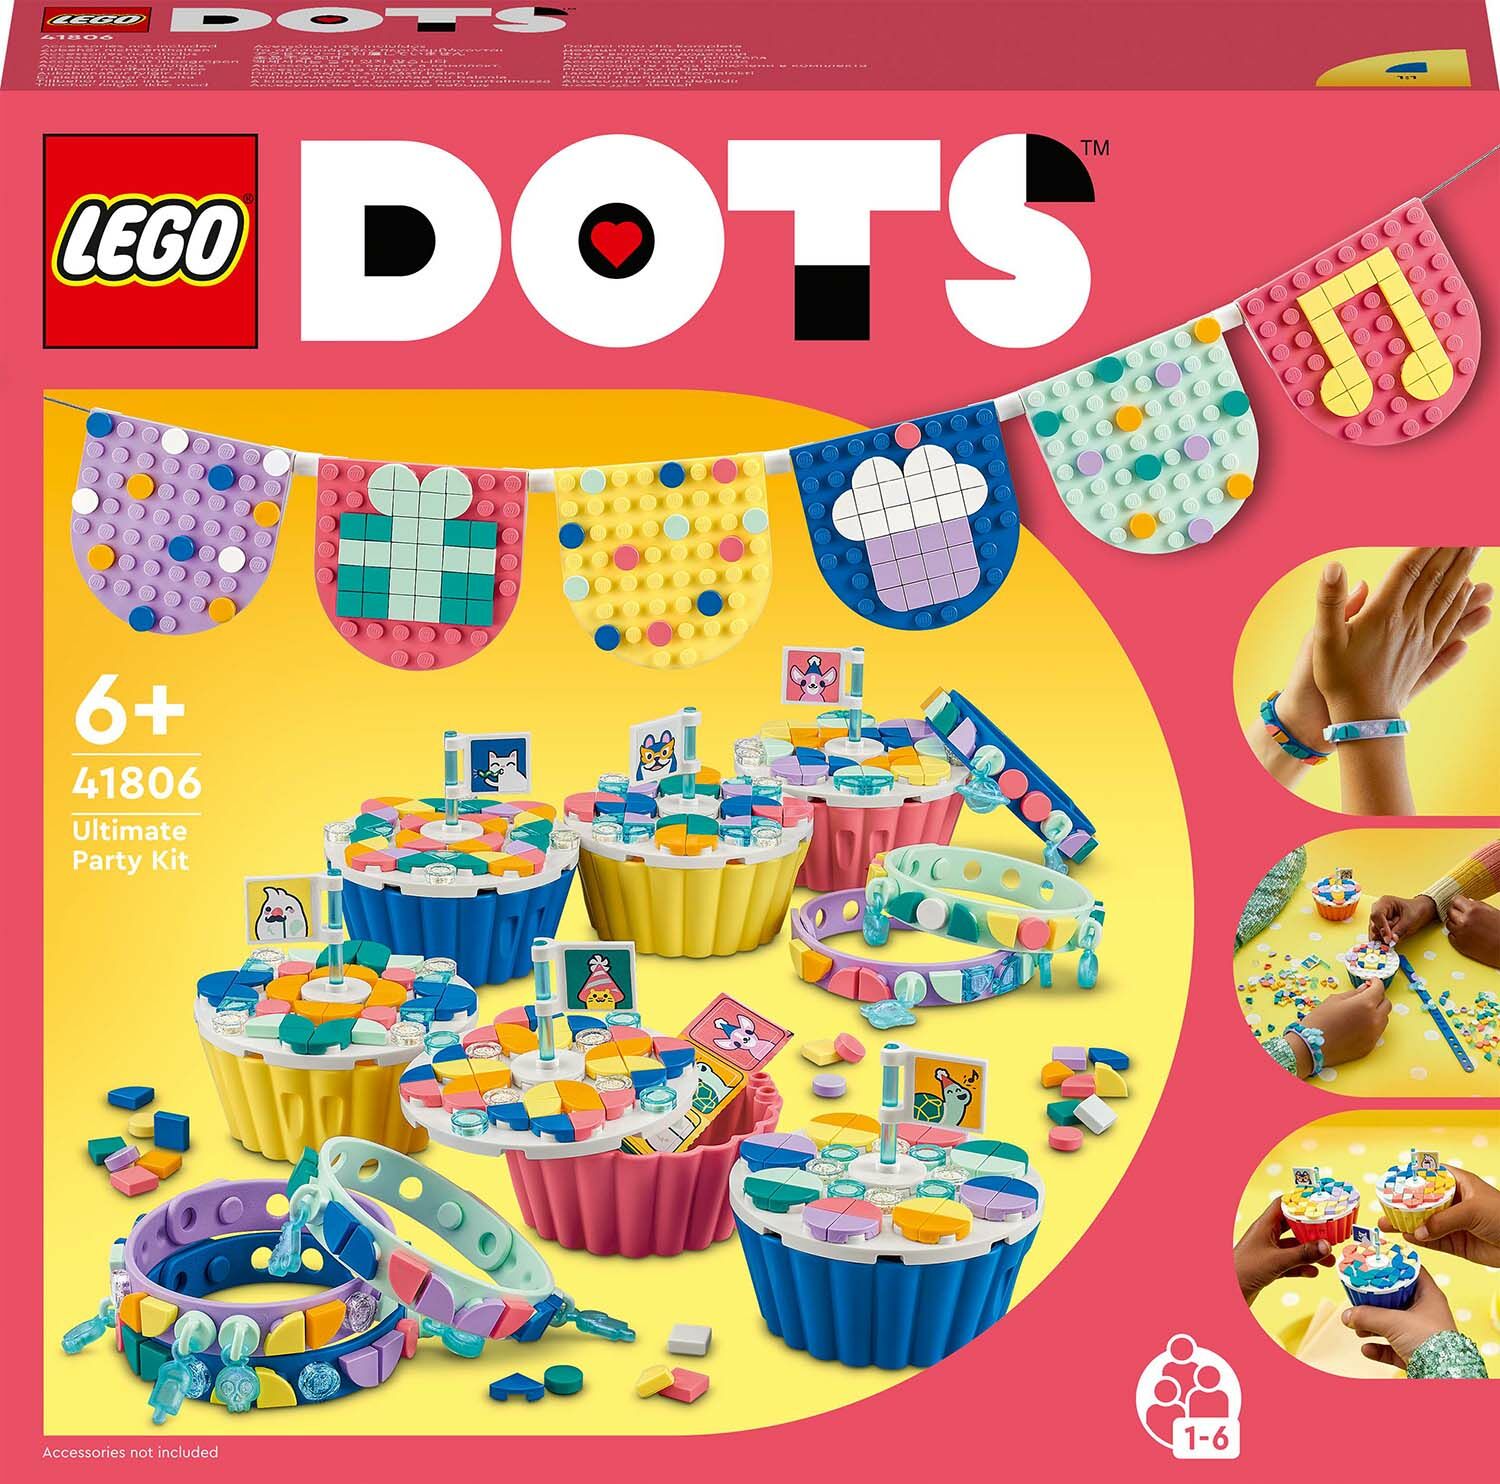 LEGO DOTS 41806 Ultimat partyset